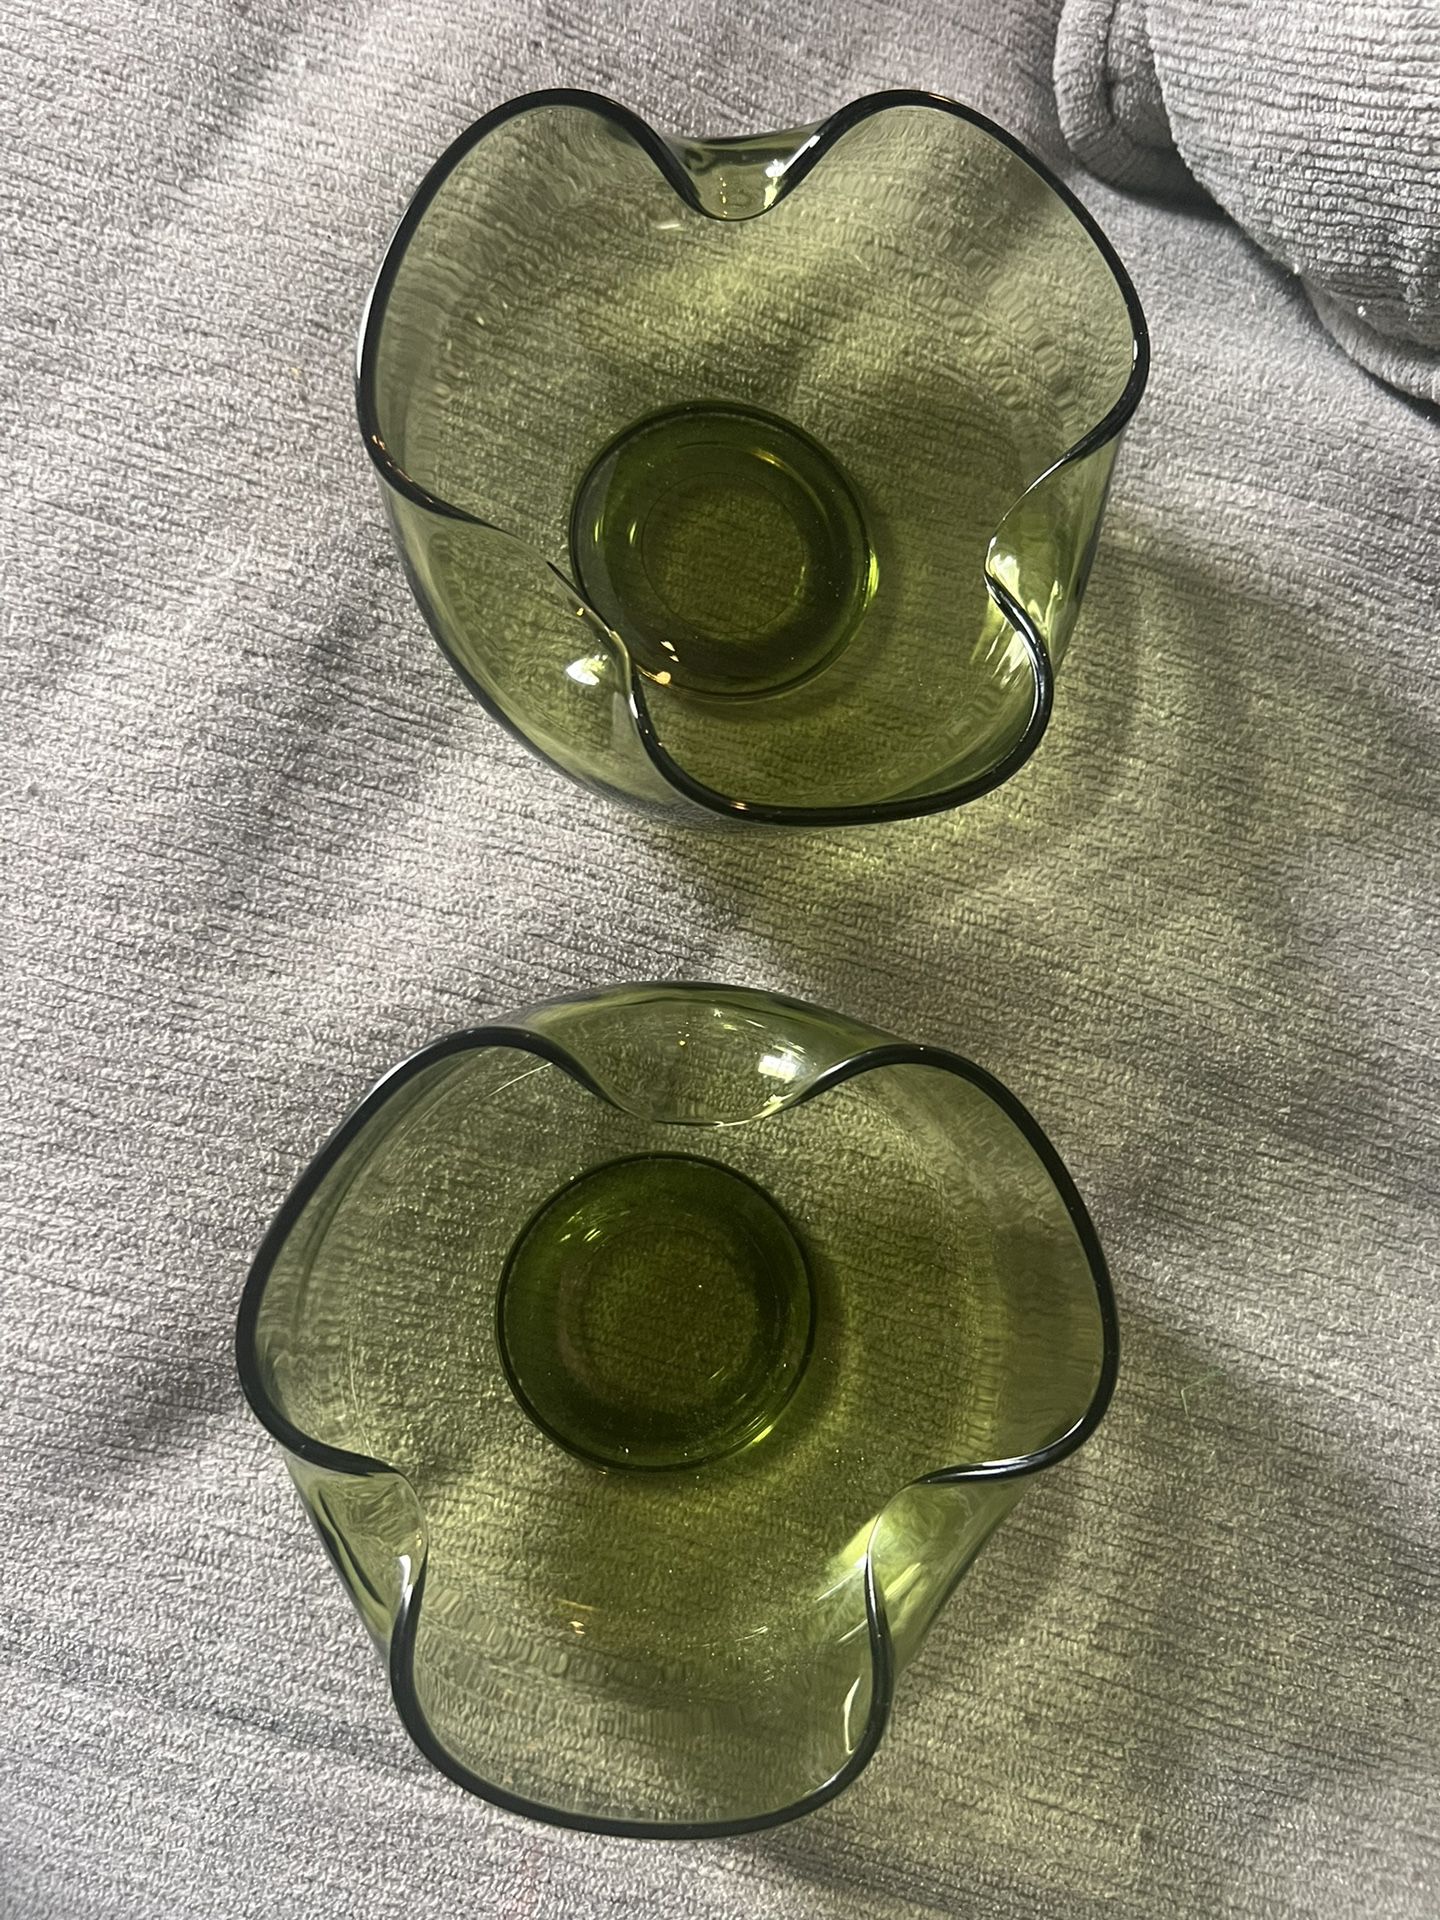 ANCHOR HOCKING VINTAGE GLASS